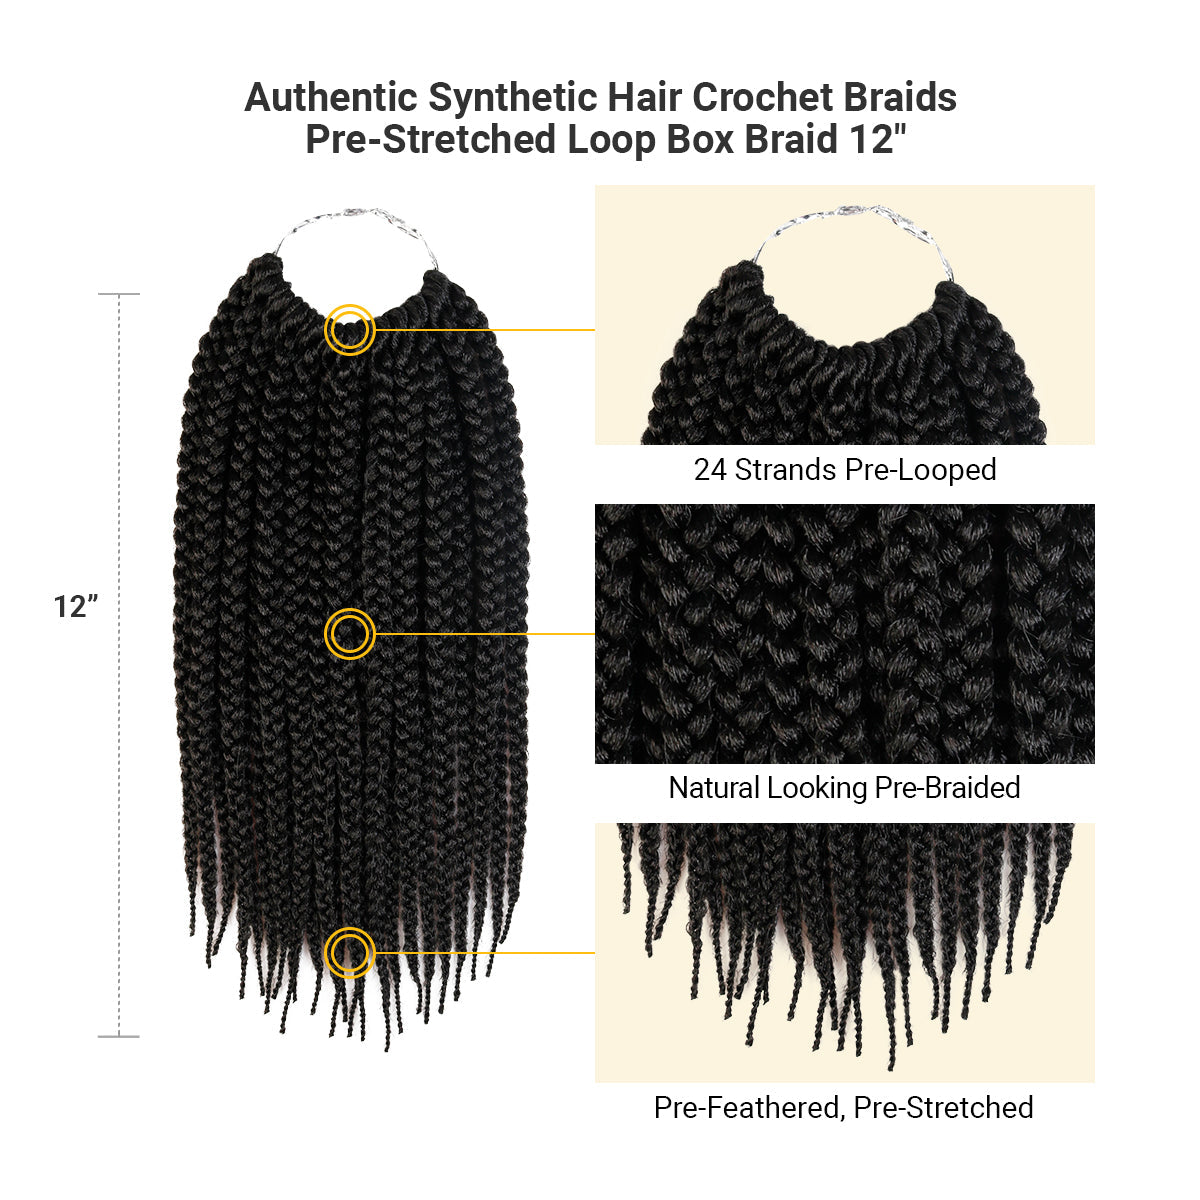 Authentic Synthetic Hair Crochet Braid Pre-Looped Box Braid 12"